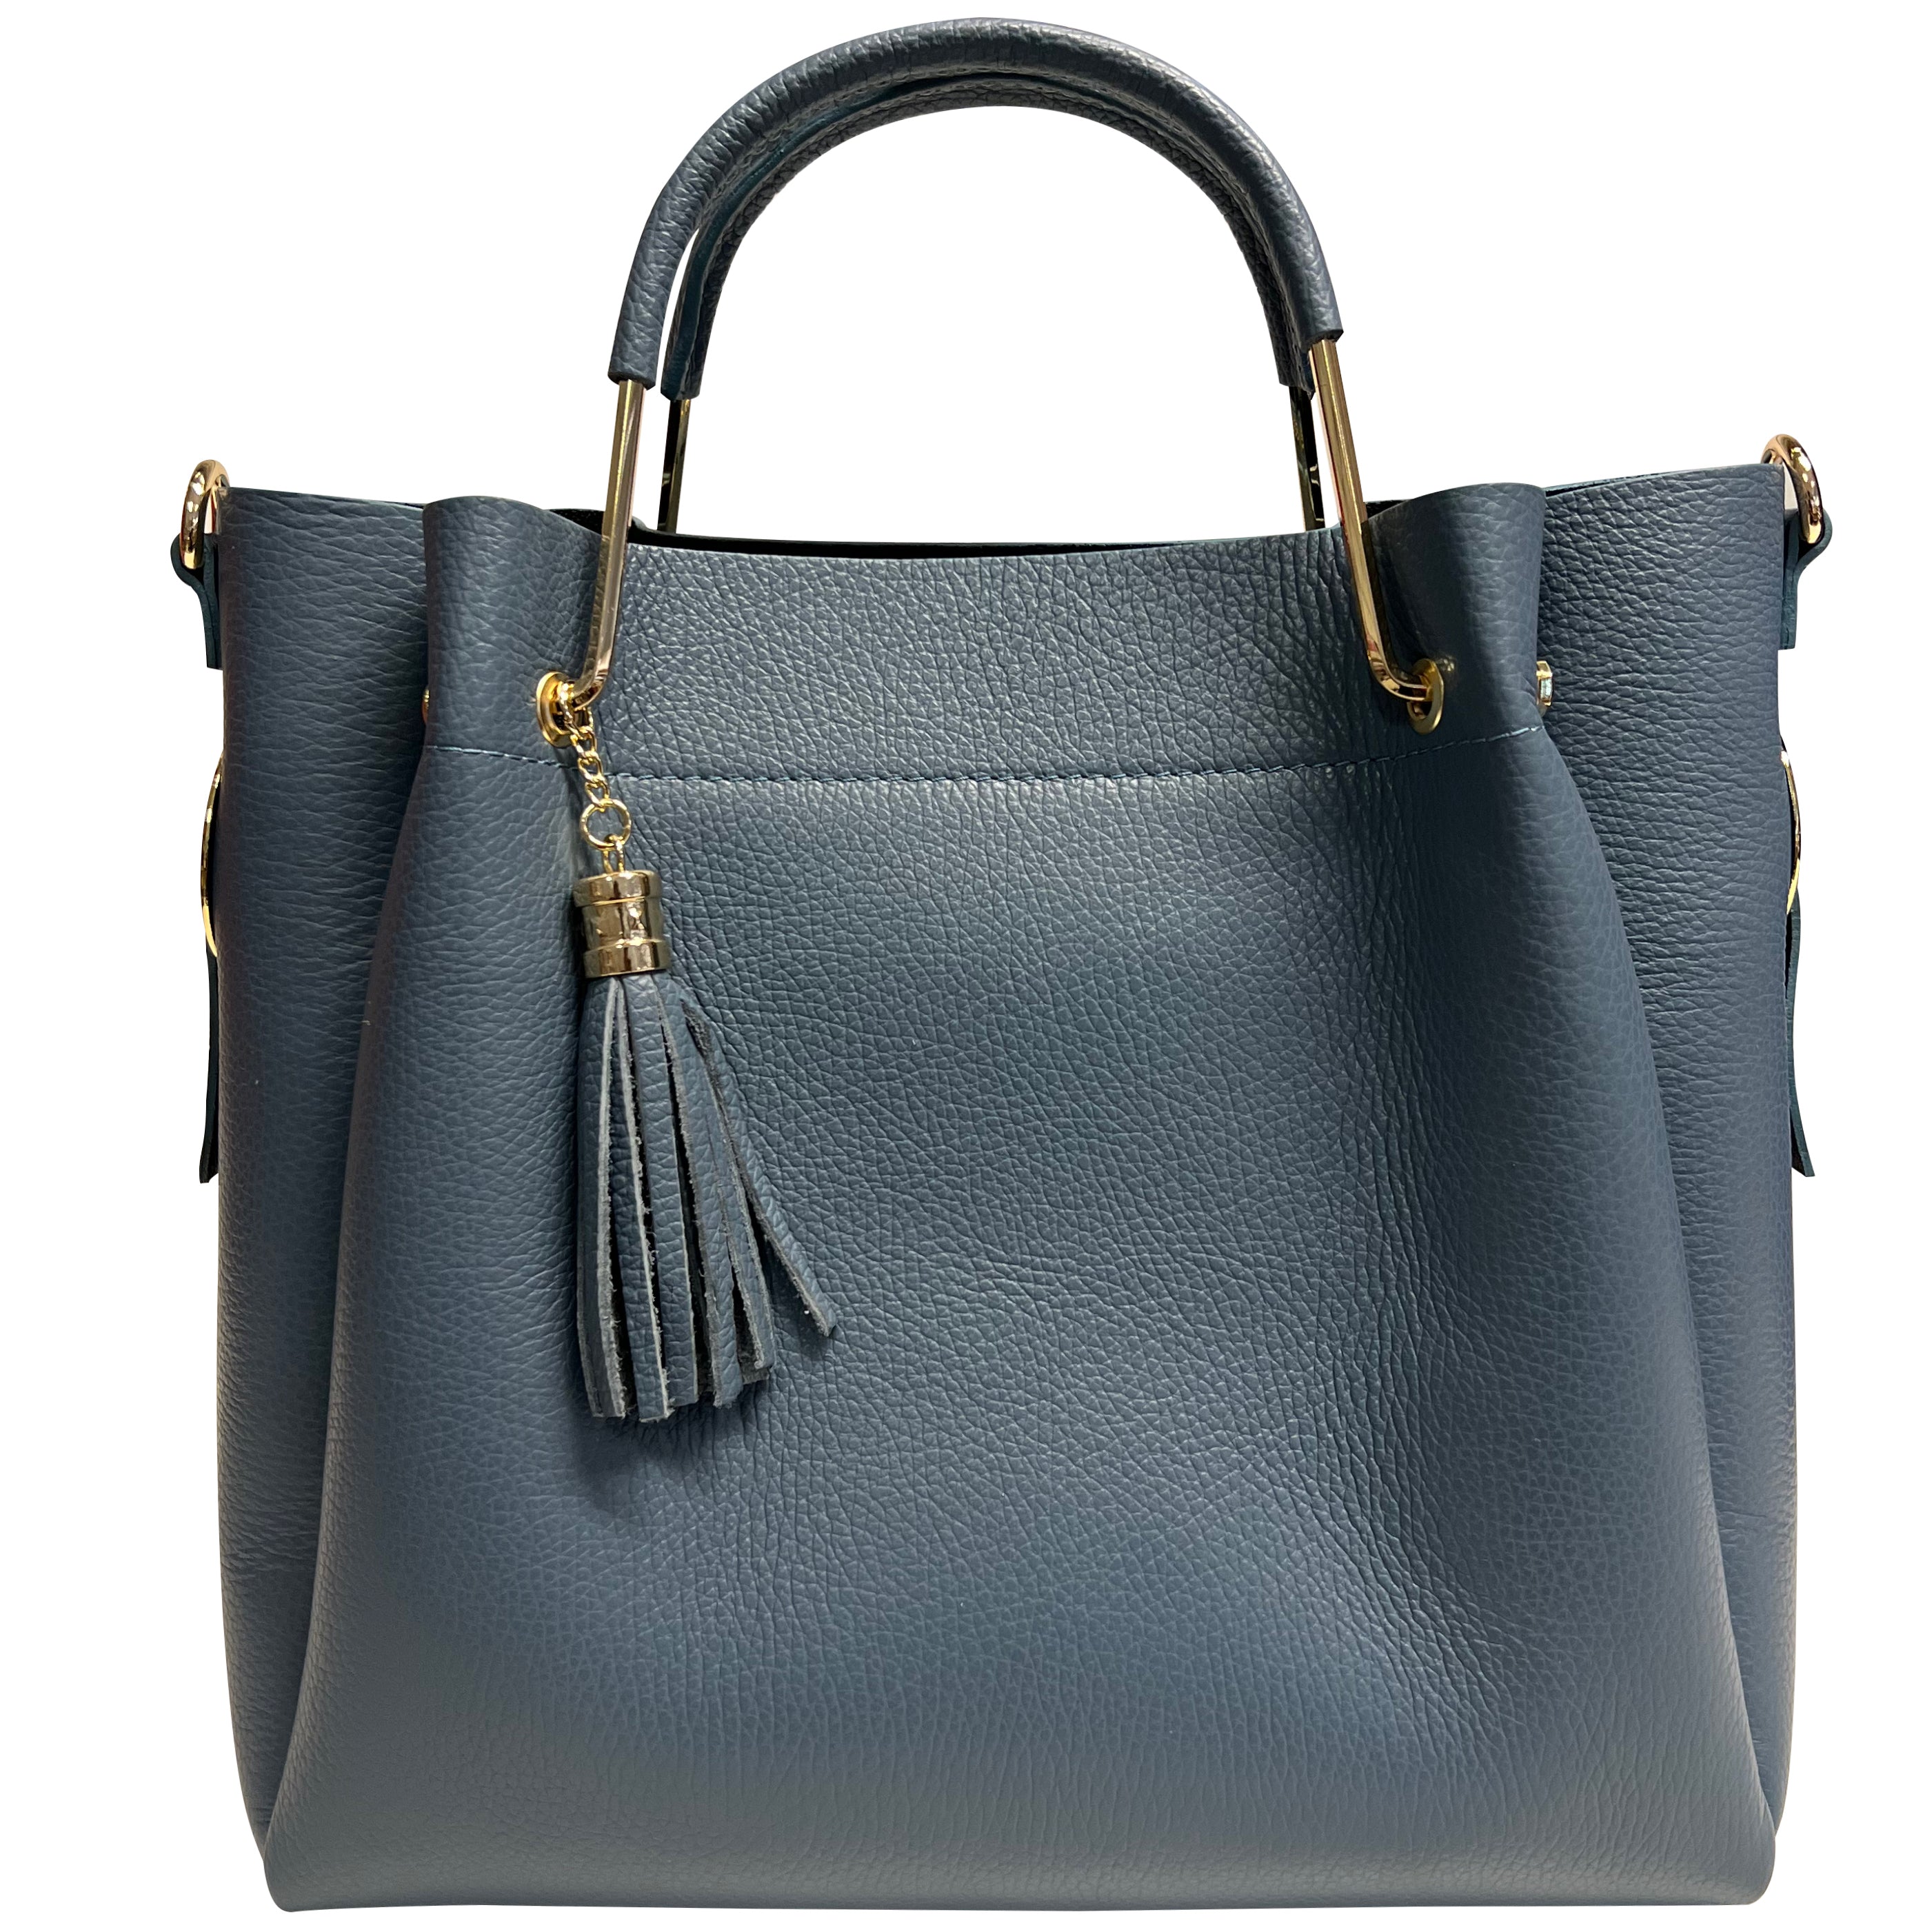 Modarno Woman Bucket Bag in Genuine Leather + Fiona model inner bag